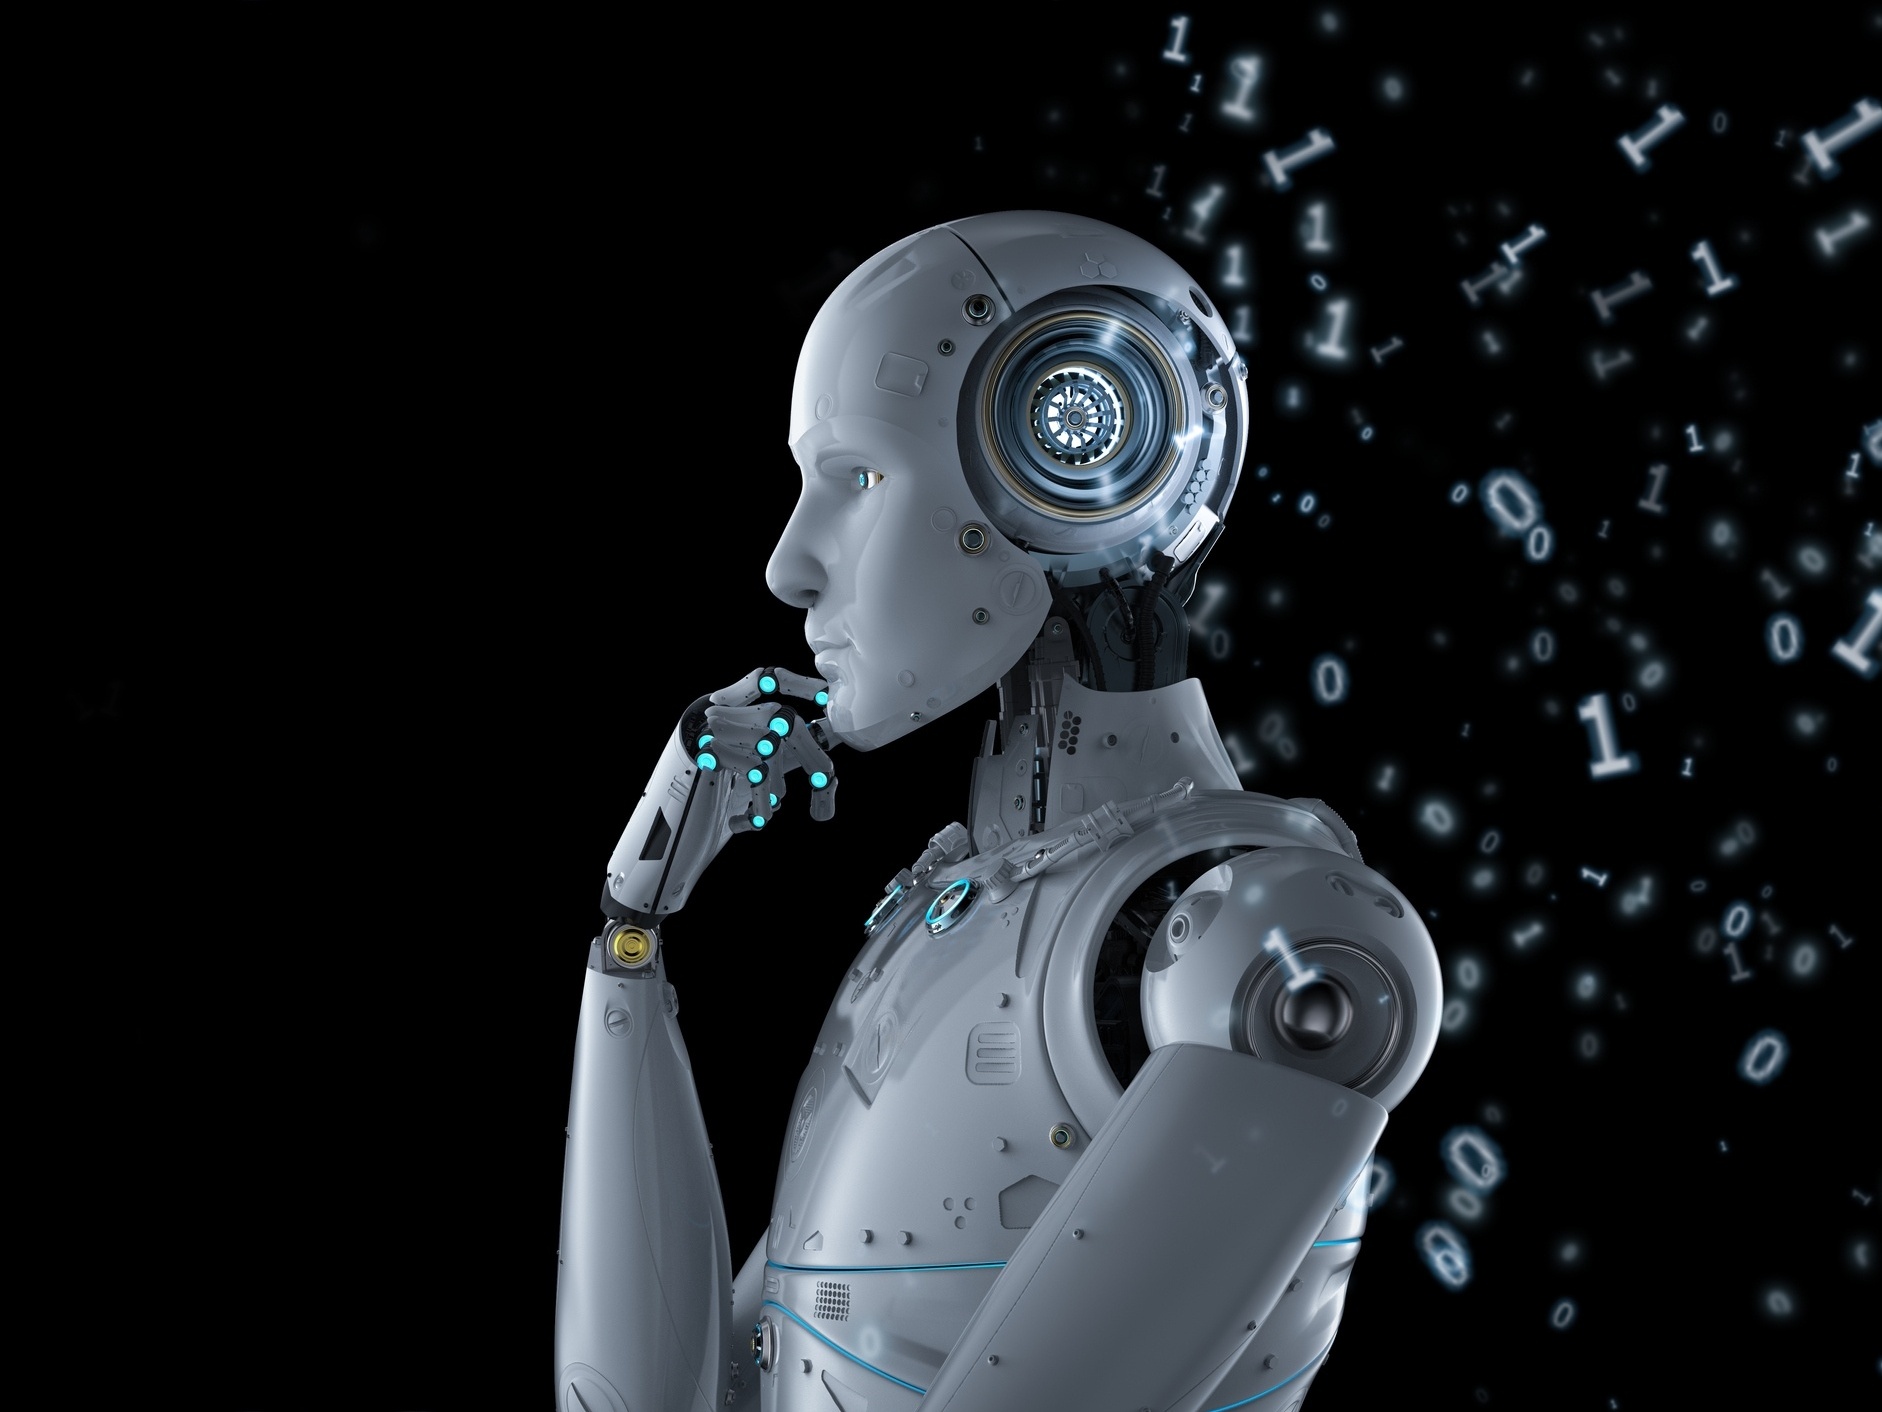 ChatGPT: conheça o robô conversador que viralizou por ter resposta para  (quase) tudo, Tecnologia